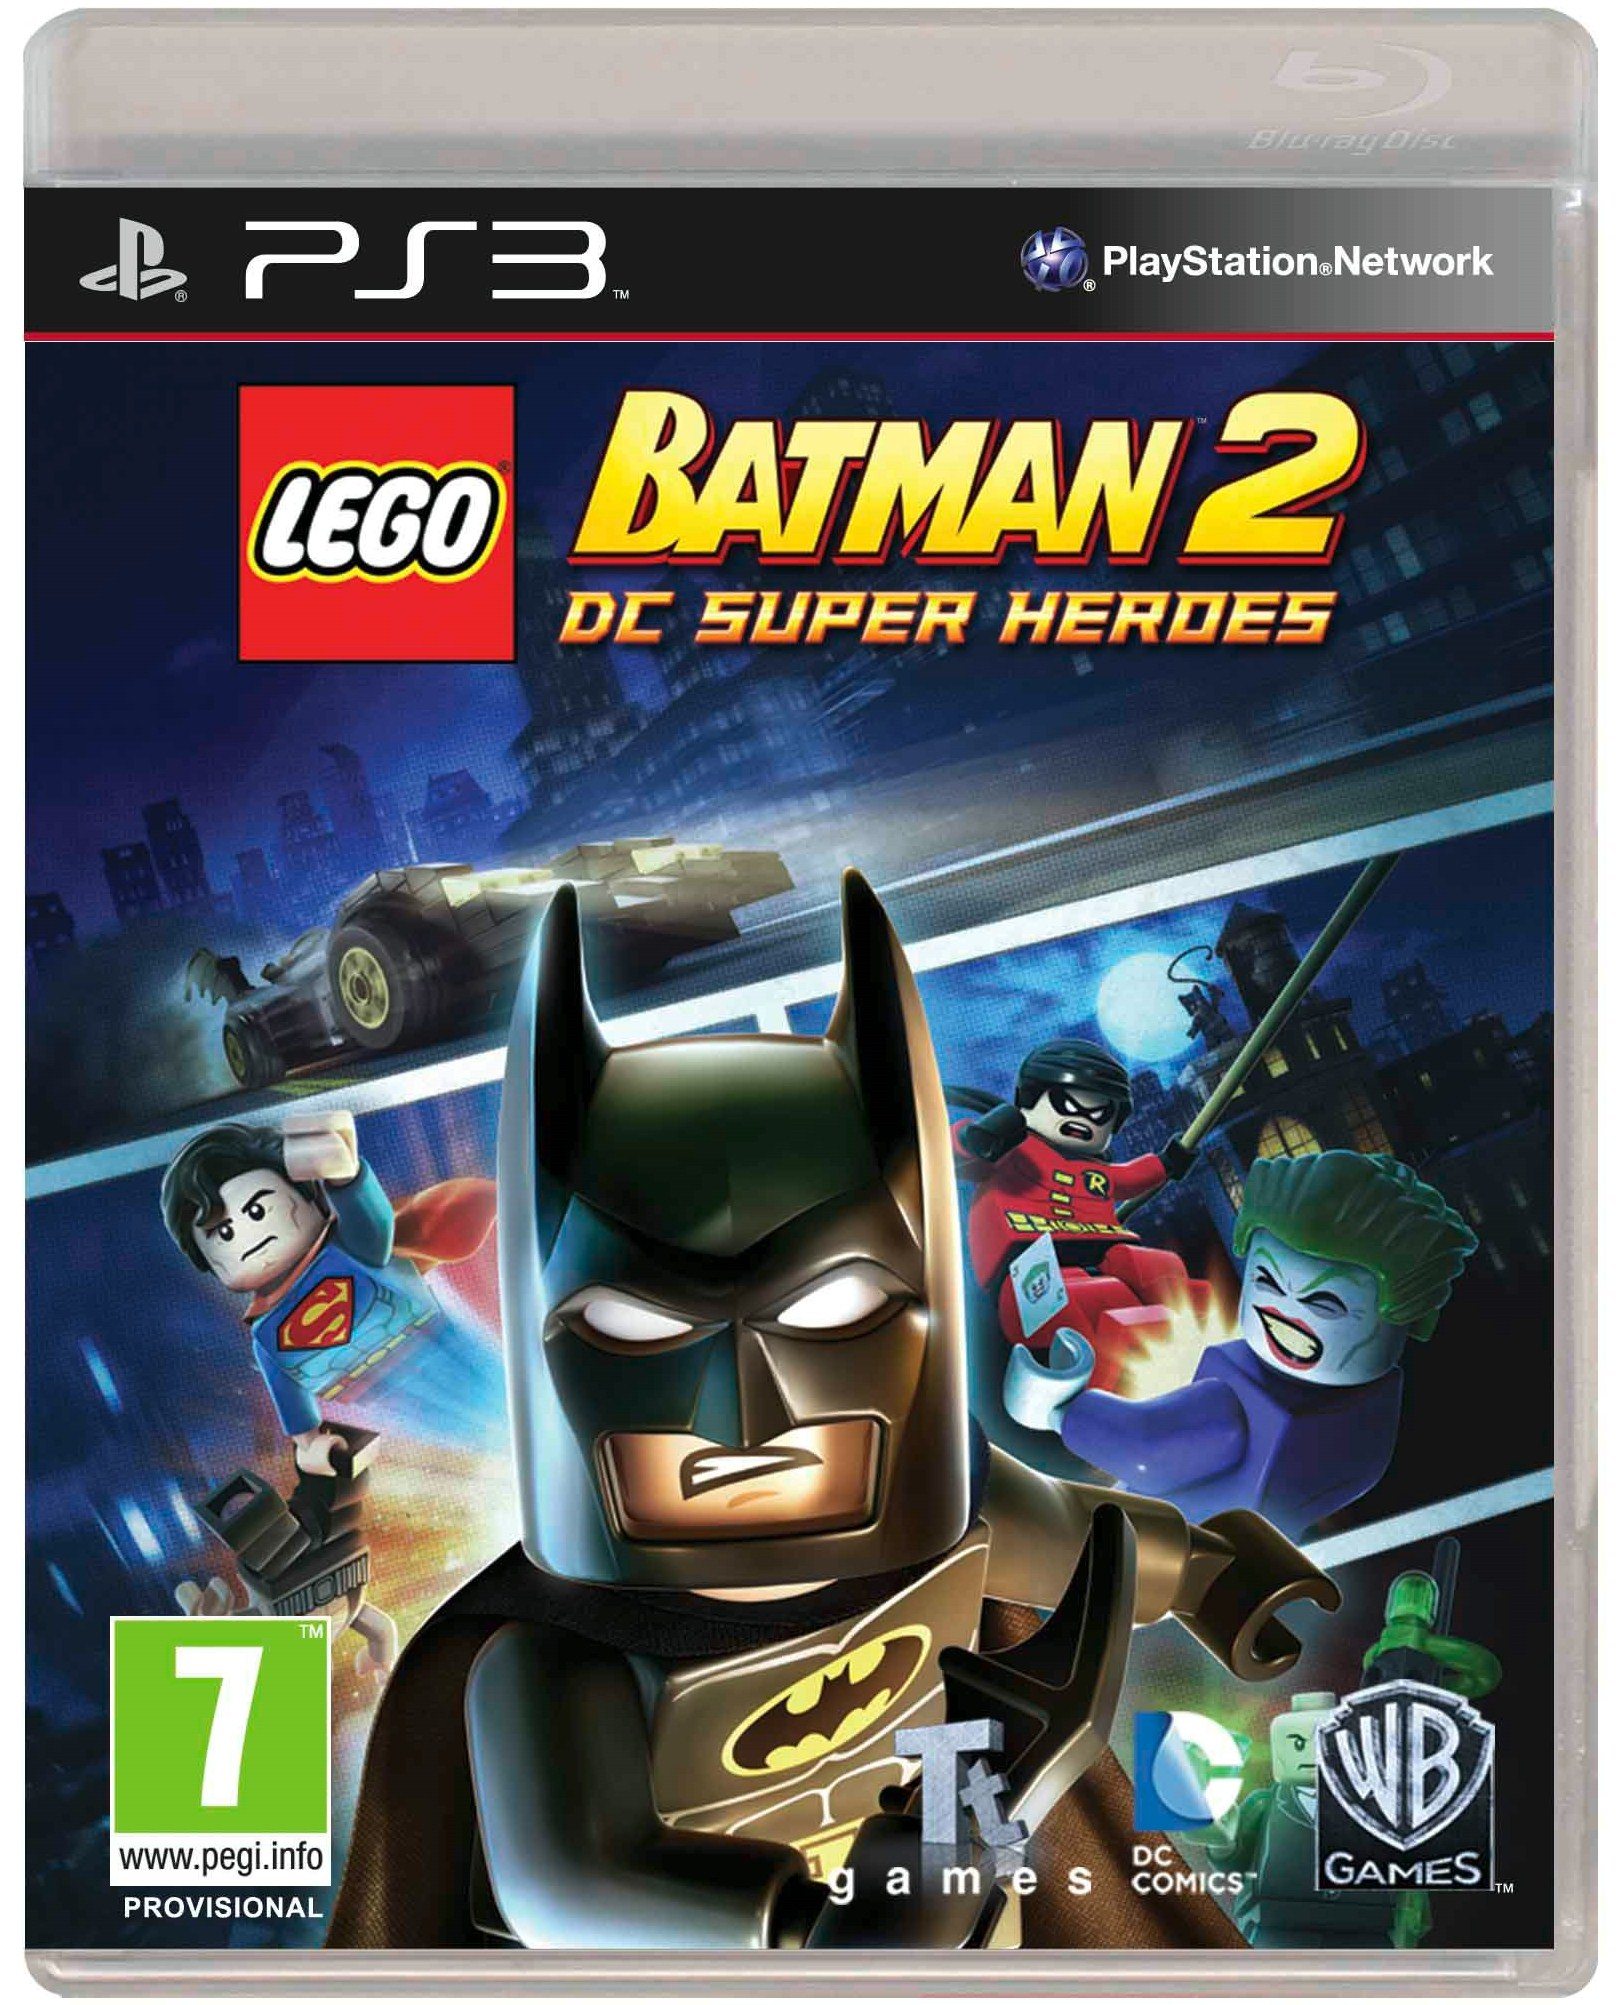 Lego Batman 2 Review (PS3) - Gadget Review